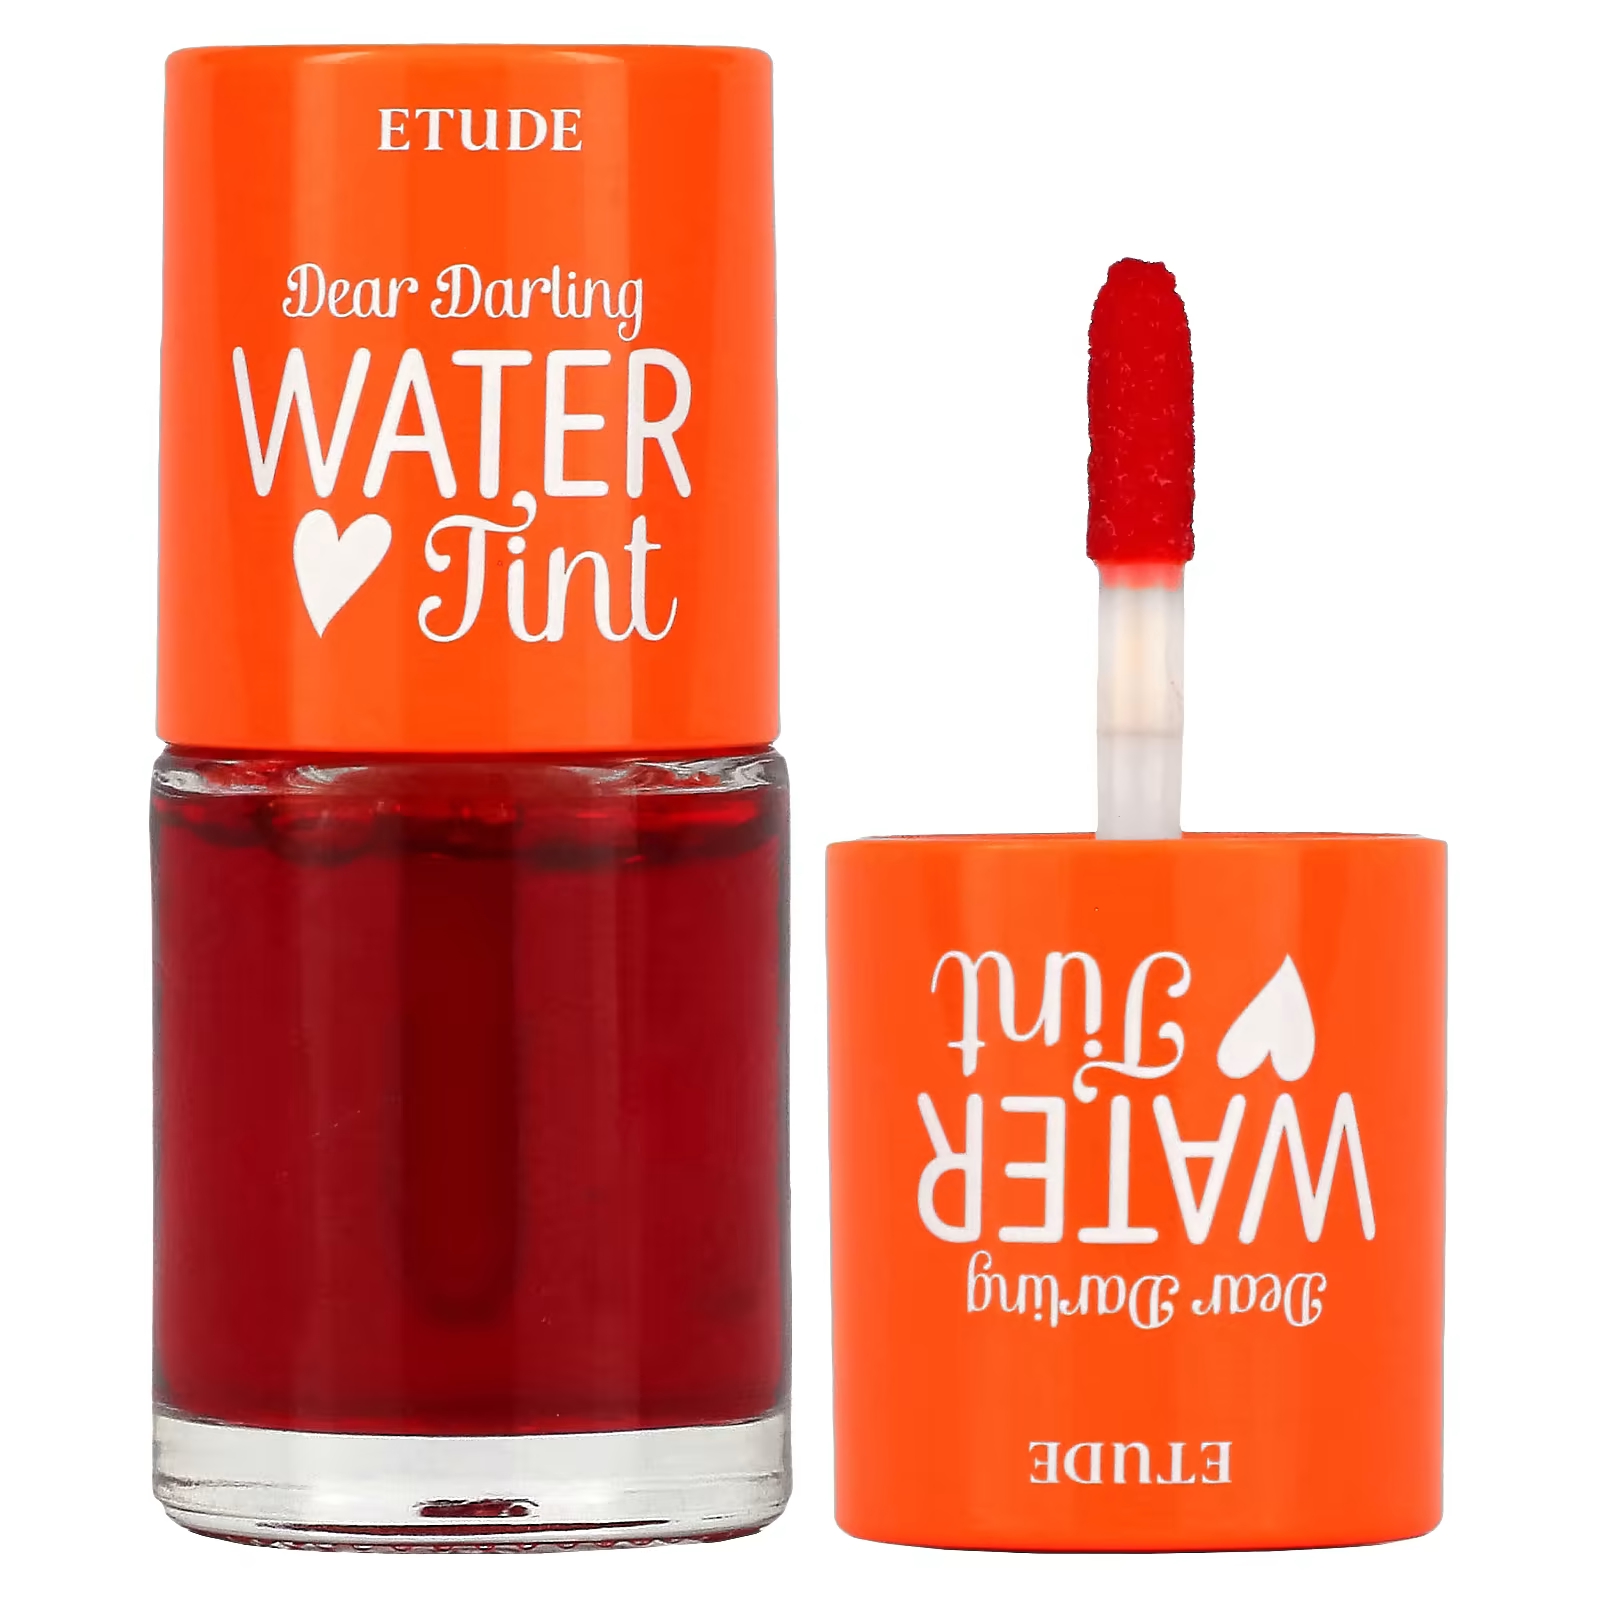 Etude Dear Darling Water Tint Orange Ade 9,5 г etude dear darling water tint вишневый оттенок 9 г